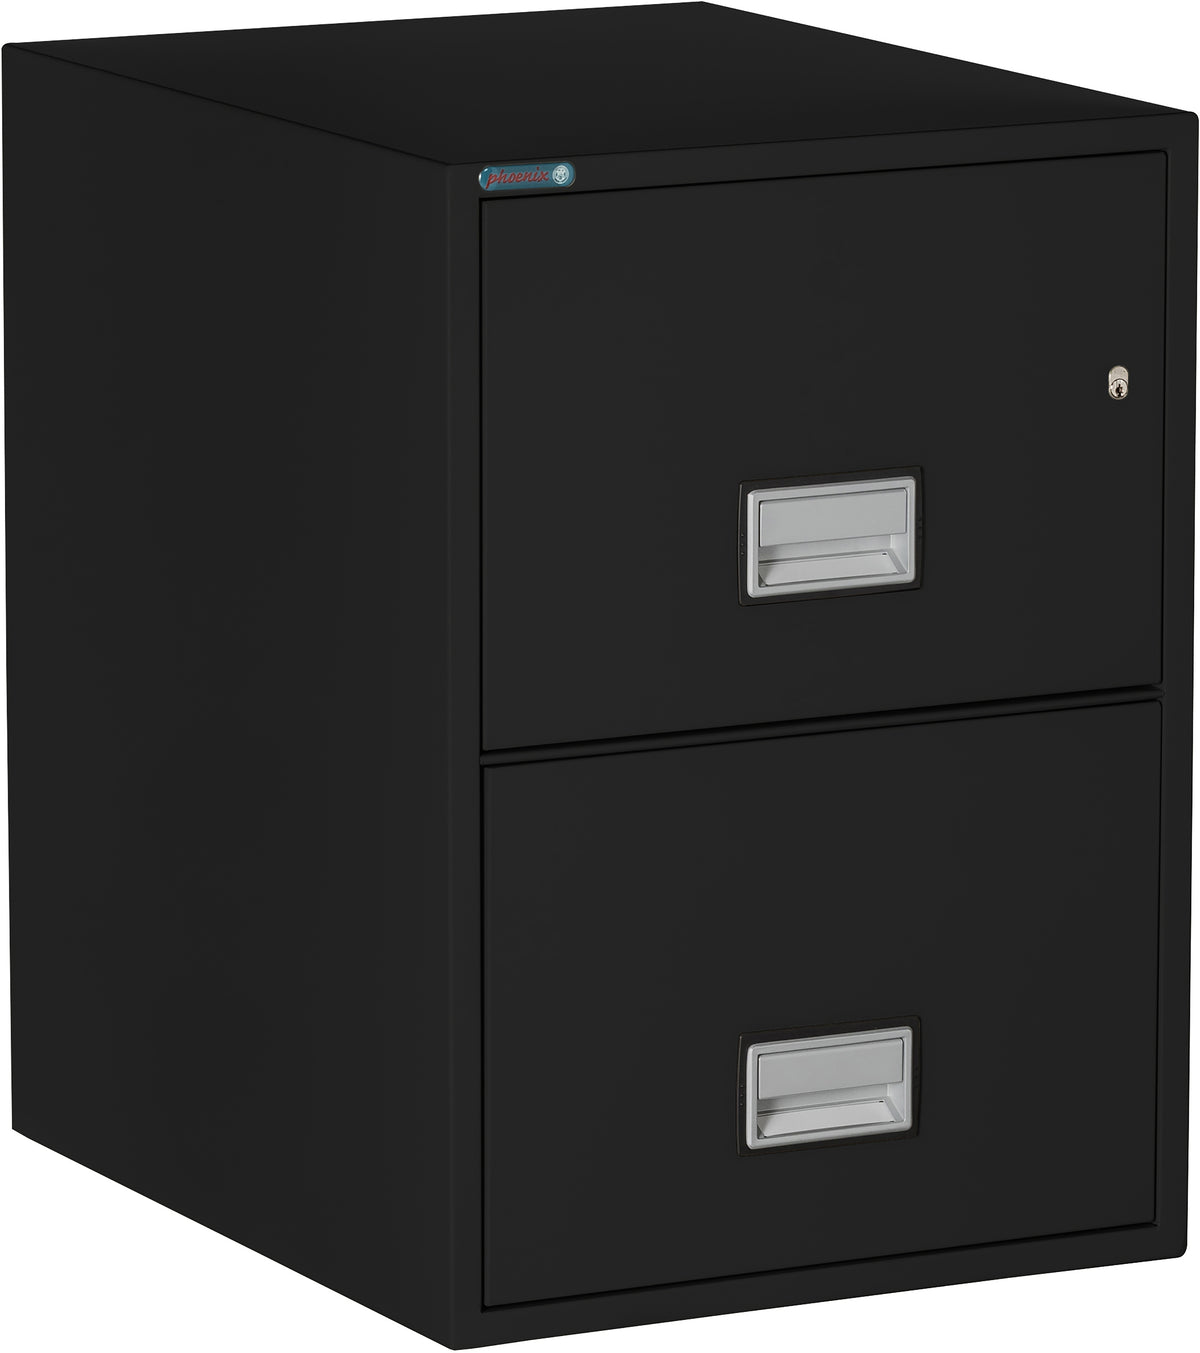 Phoenix Safe LGL2W25 25 inch 2 Drawer Legal Size Fire File Cabinet Black